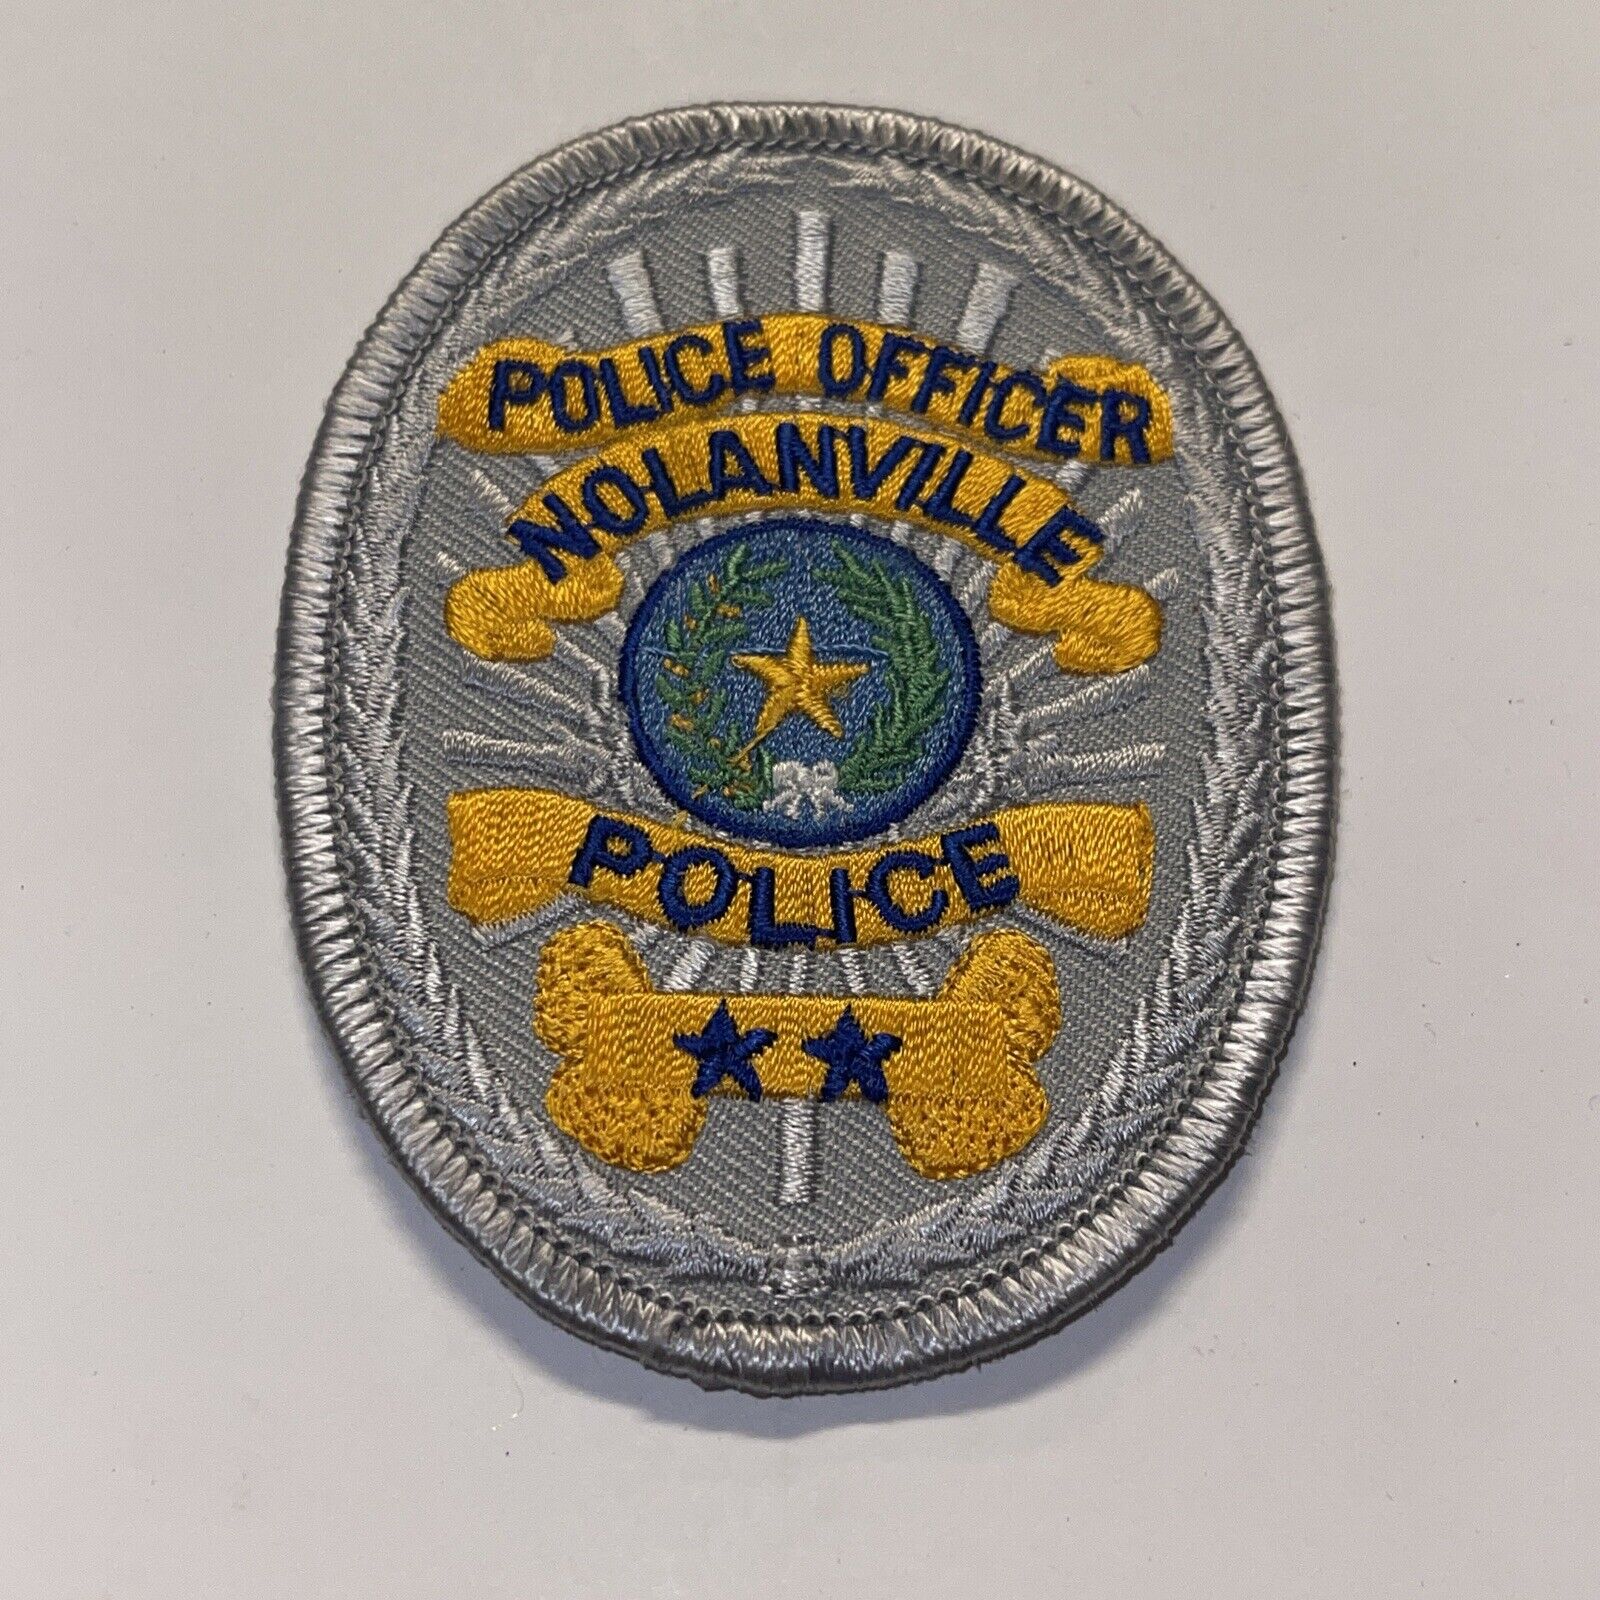 Nolanville Texas police patch obsolete shoulder rare gray yellow